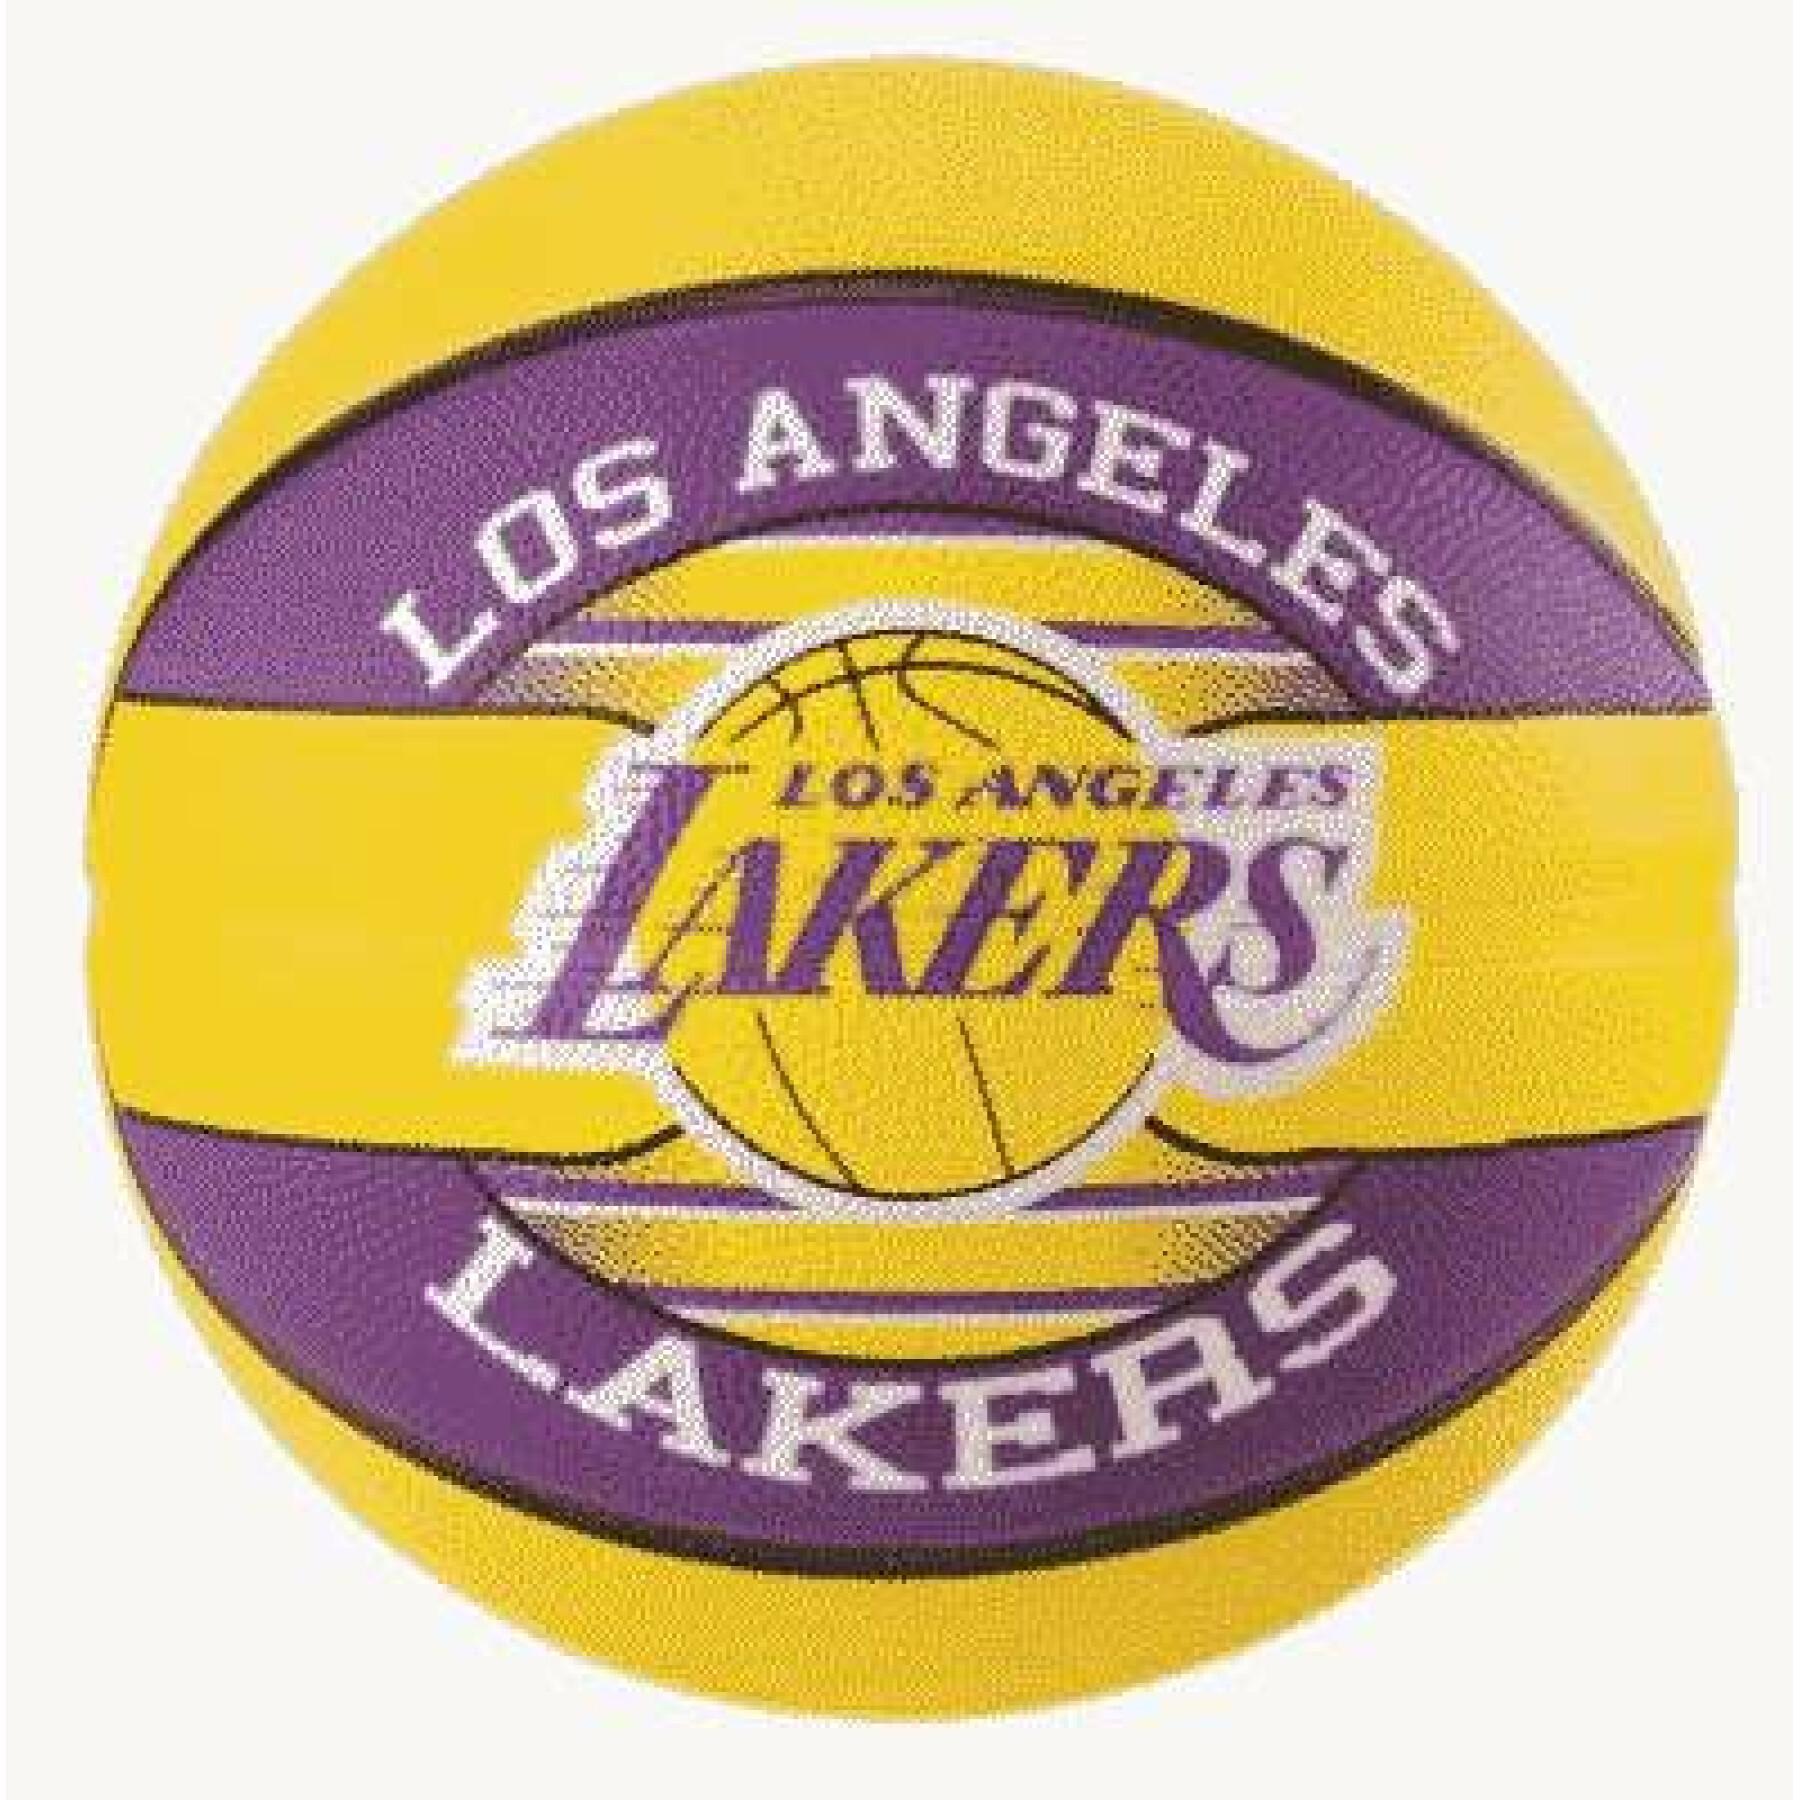 Baloncesto Spalding Los Angles Lakers